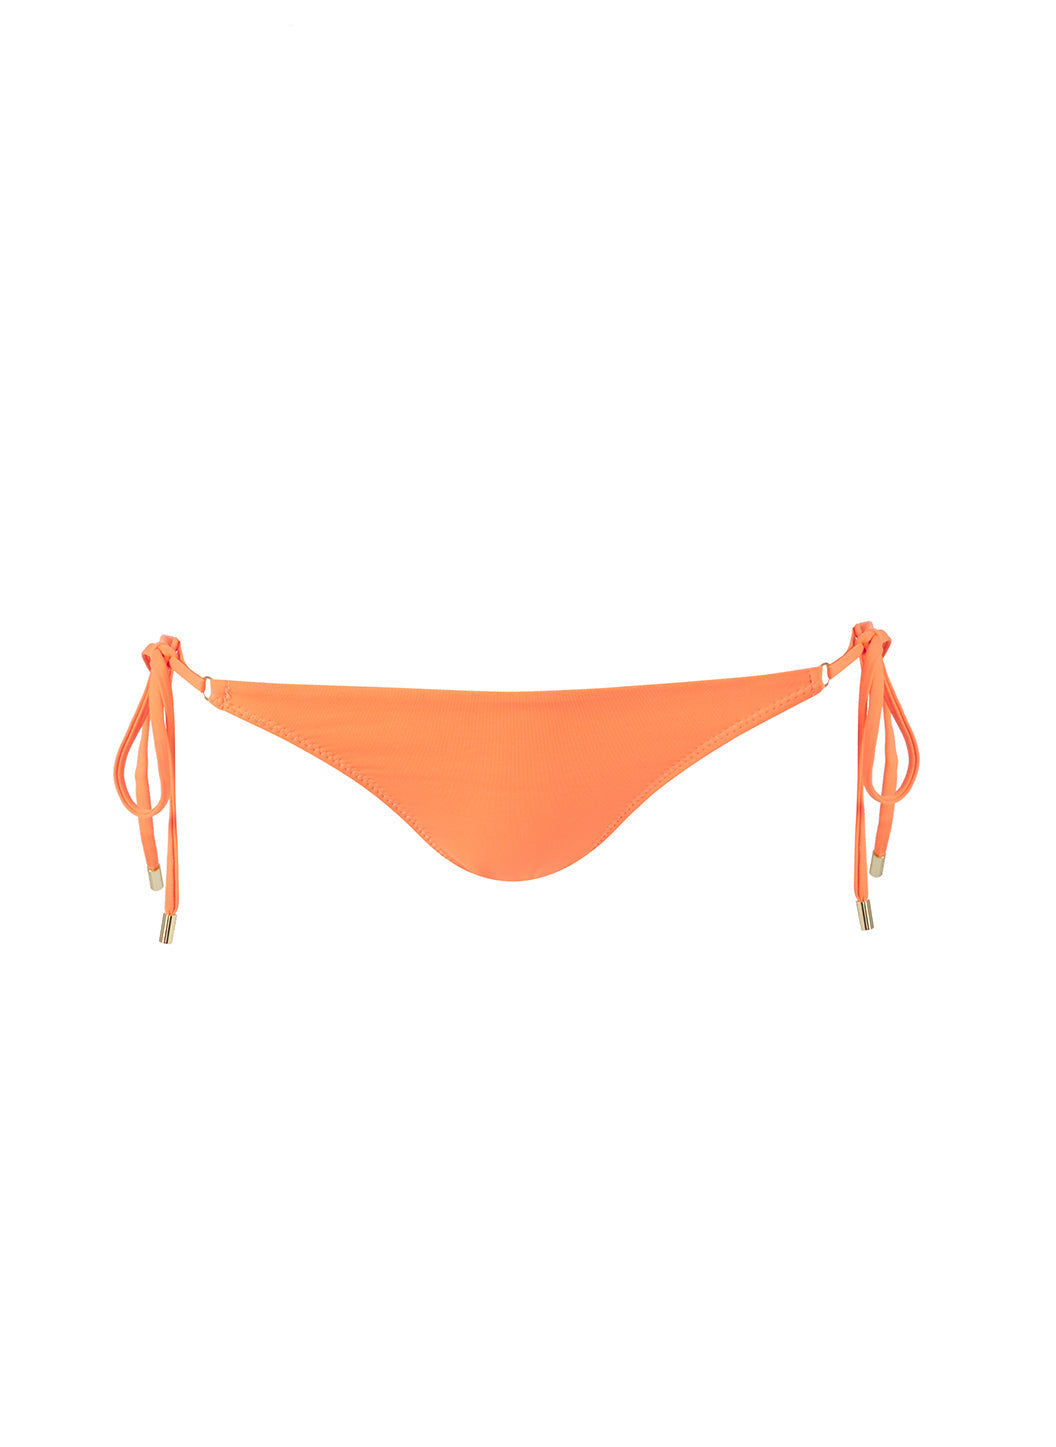 antibes-orange-bikini-bottom_cutout